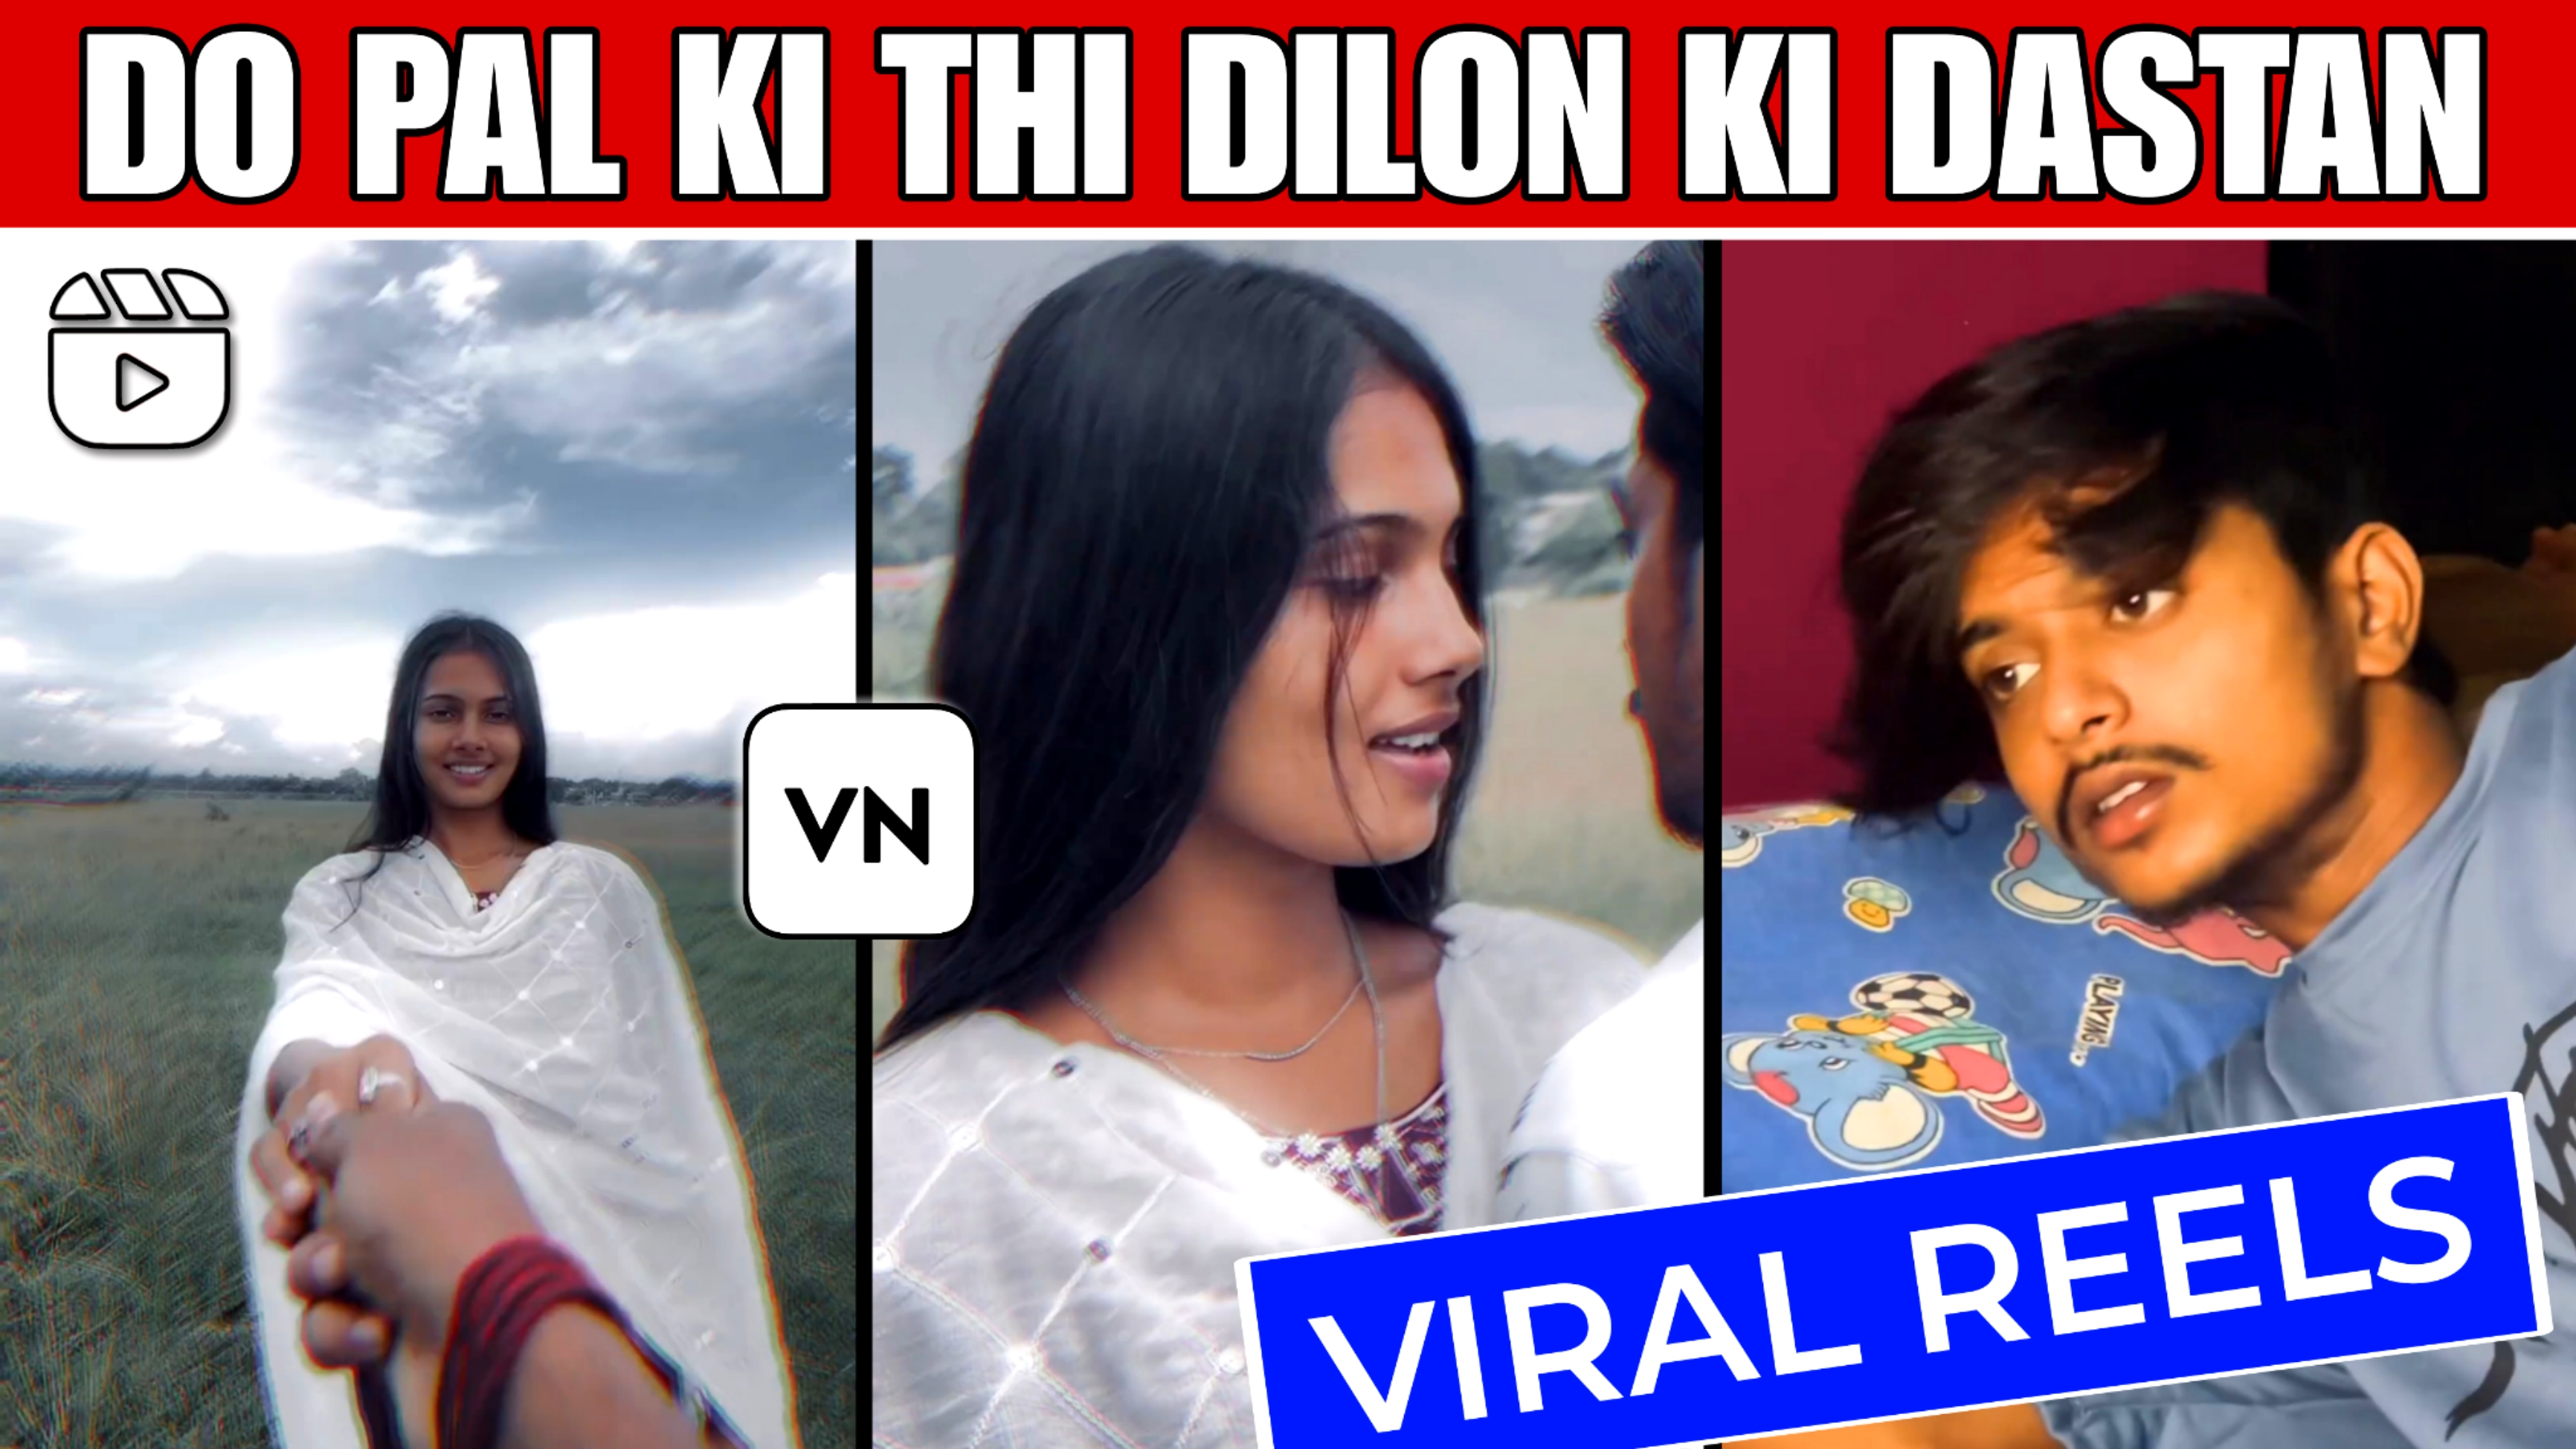 Do pal ki thi dilon ki dastan transition video editing | Instagram reels video editing || VN Video Editing